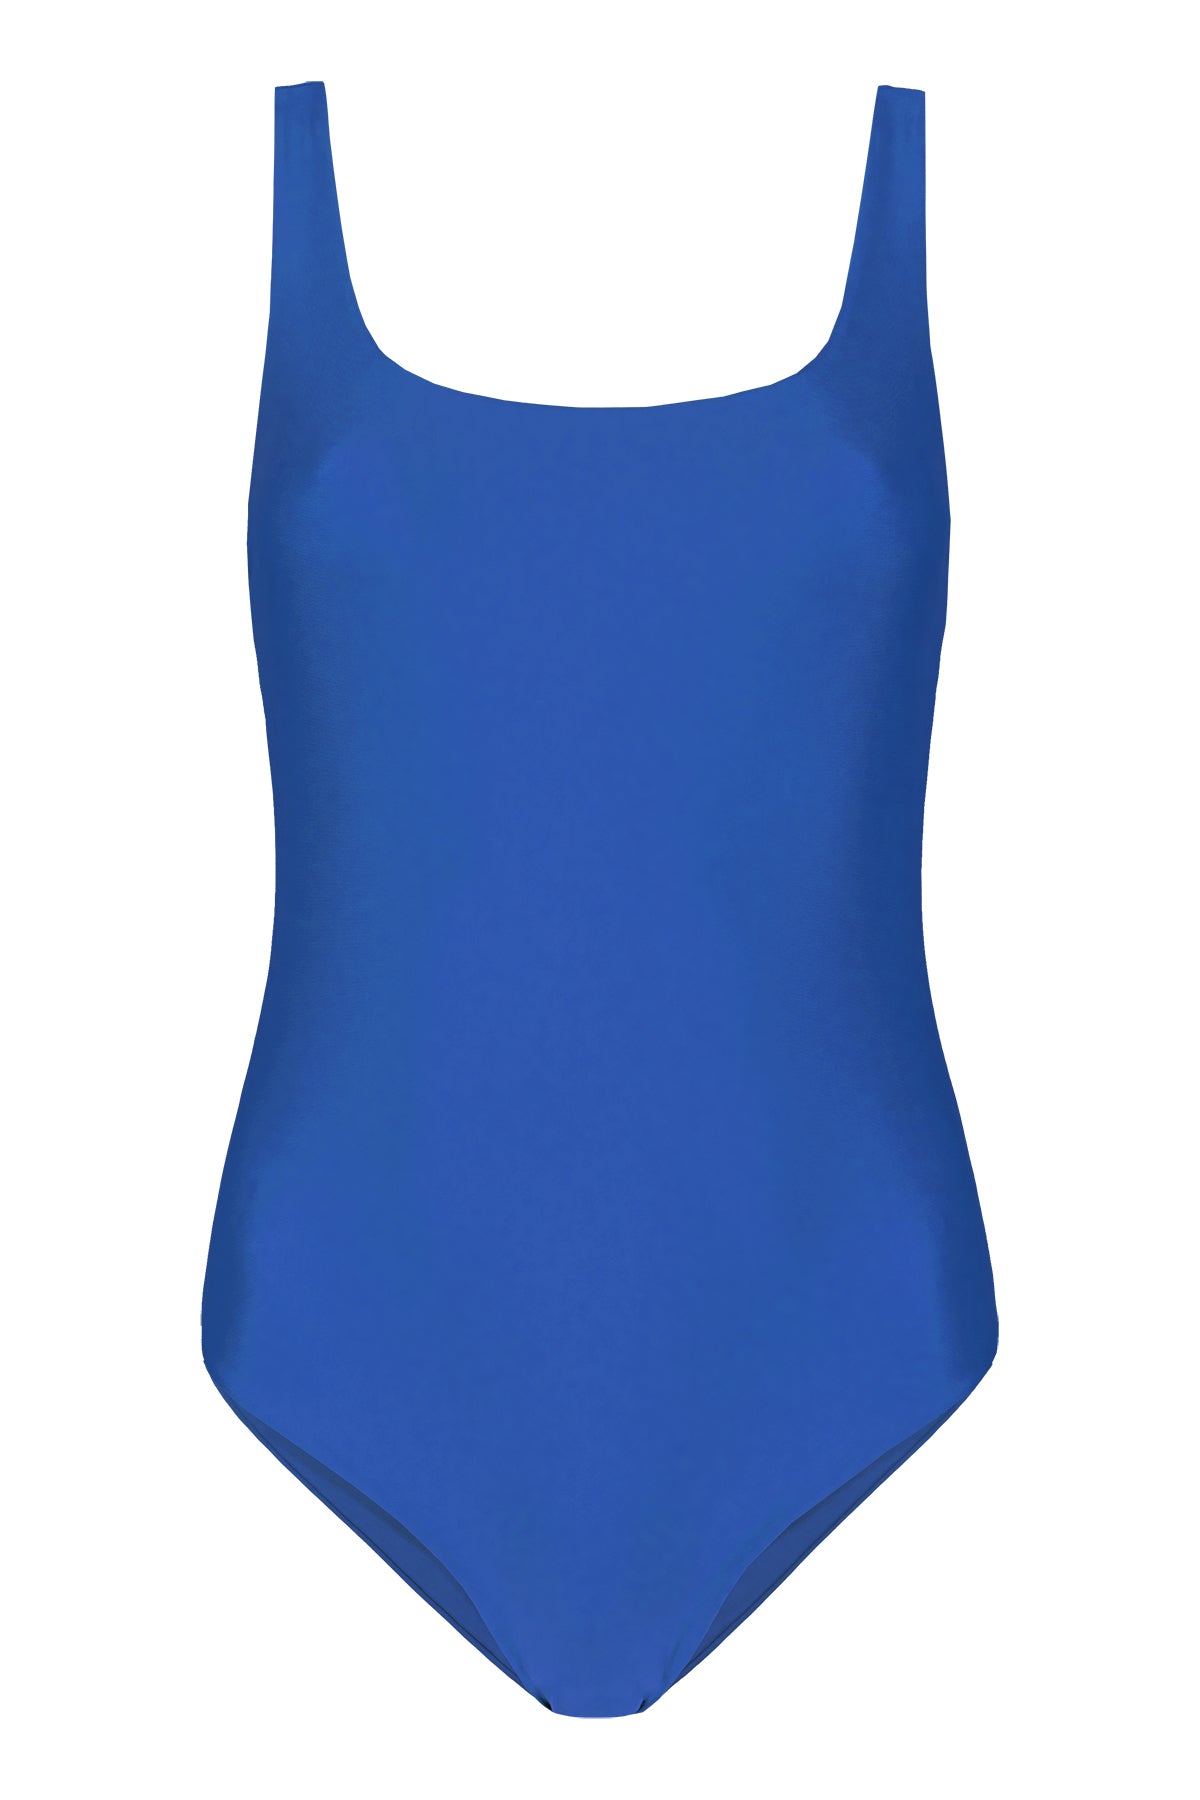 Mar Classic Onepiece | Blue onepiece swimsuit – Lilja the Label